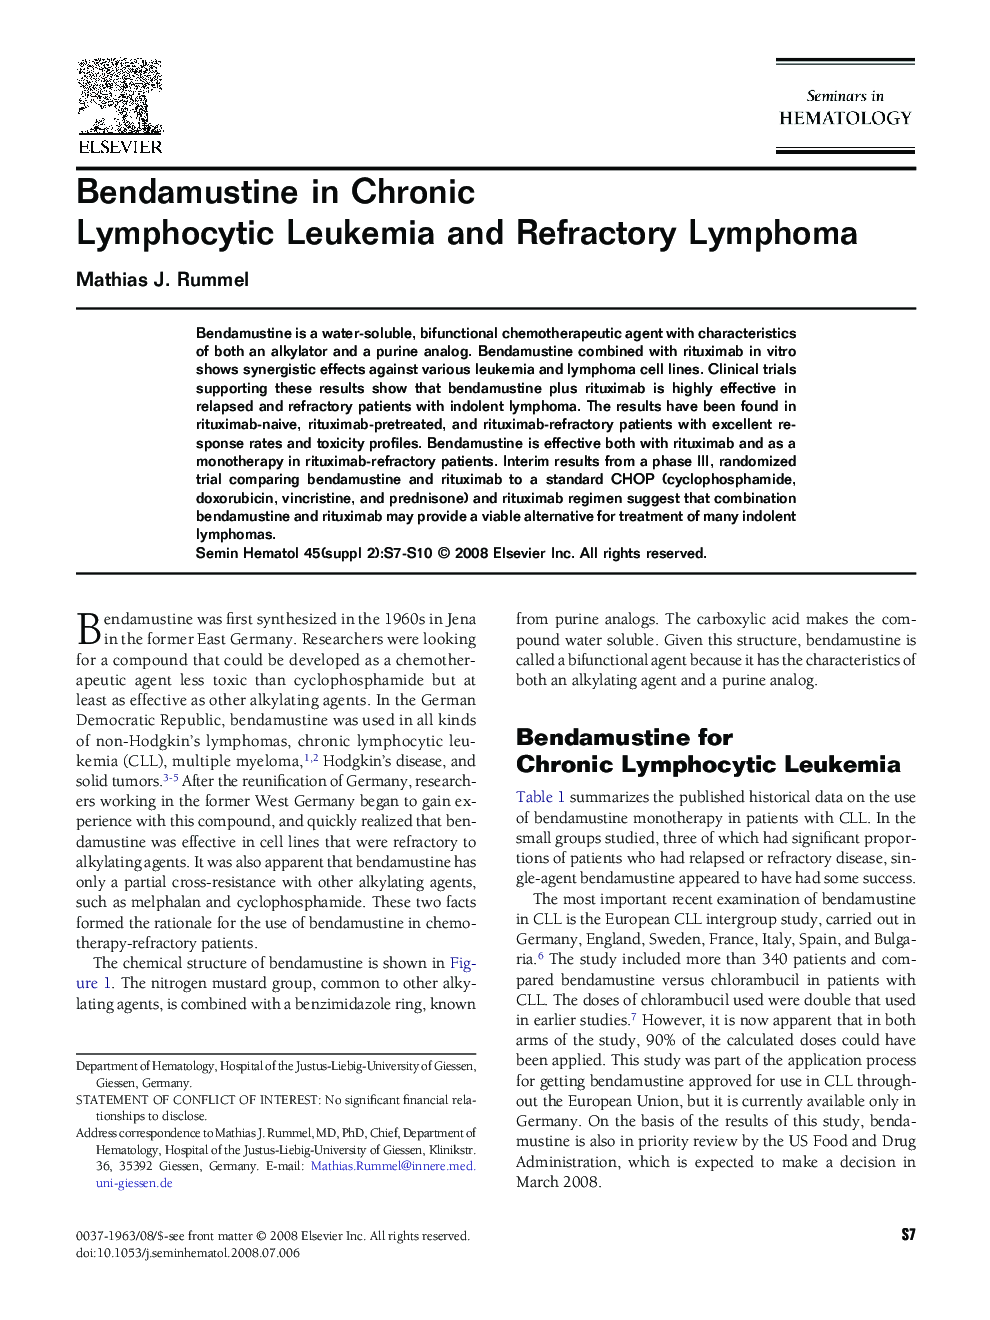 Bendamustine in Chronic Lymphocytic Leukemia and Refractory Lymphoma 